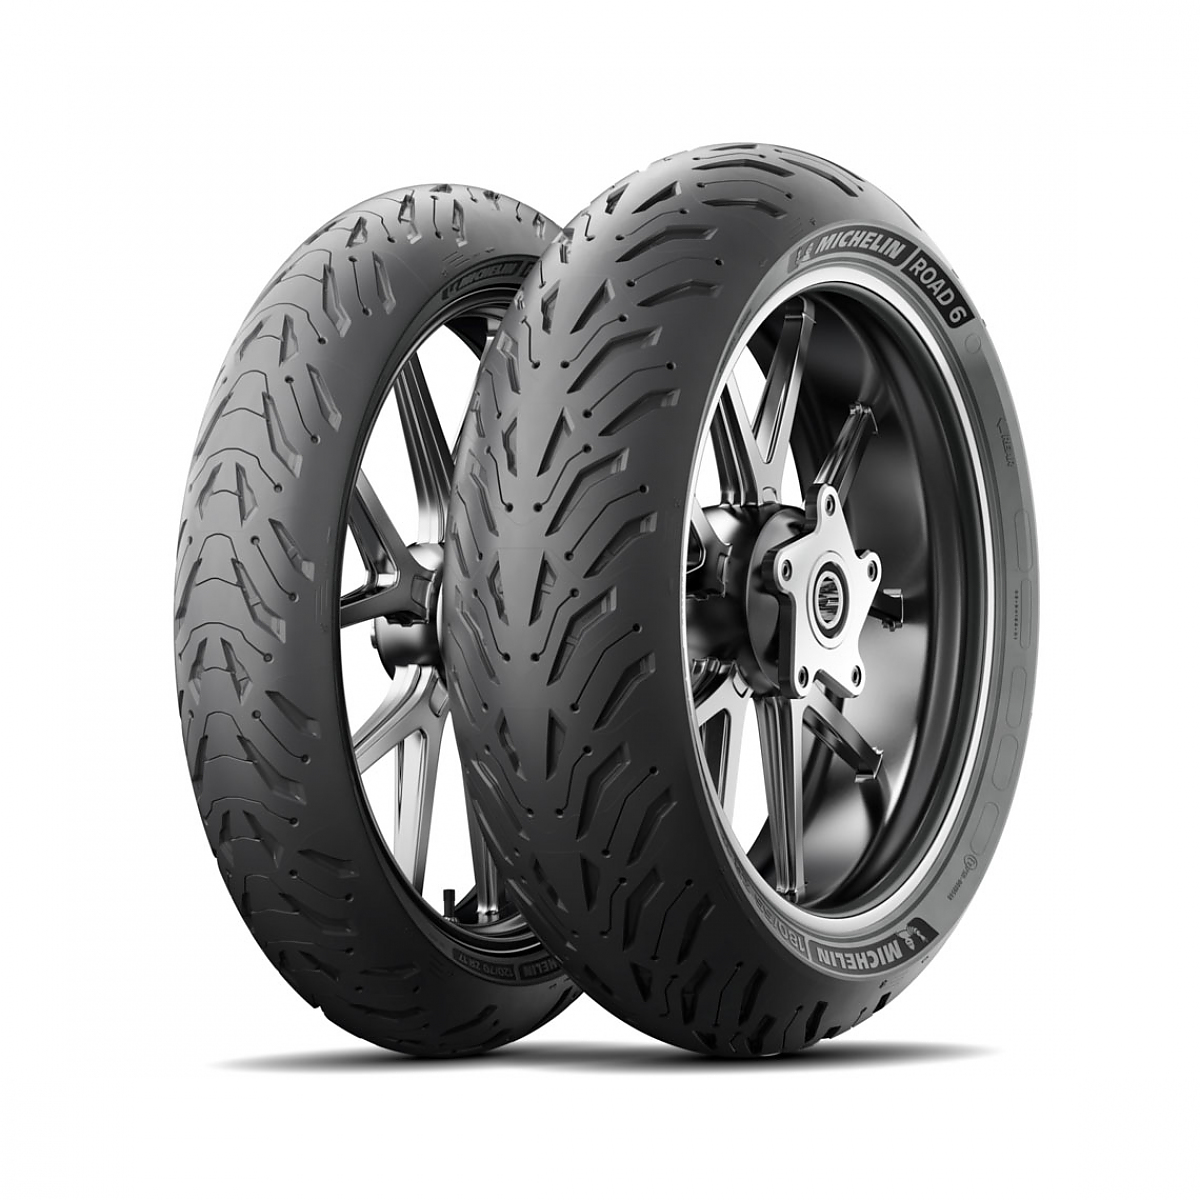 Sada moto pneu Michelin ROAD 6 - 120/60 R17 55W  + 180/55 R17 73W